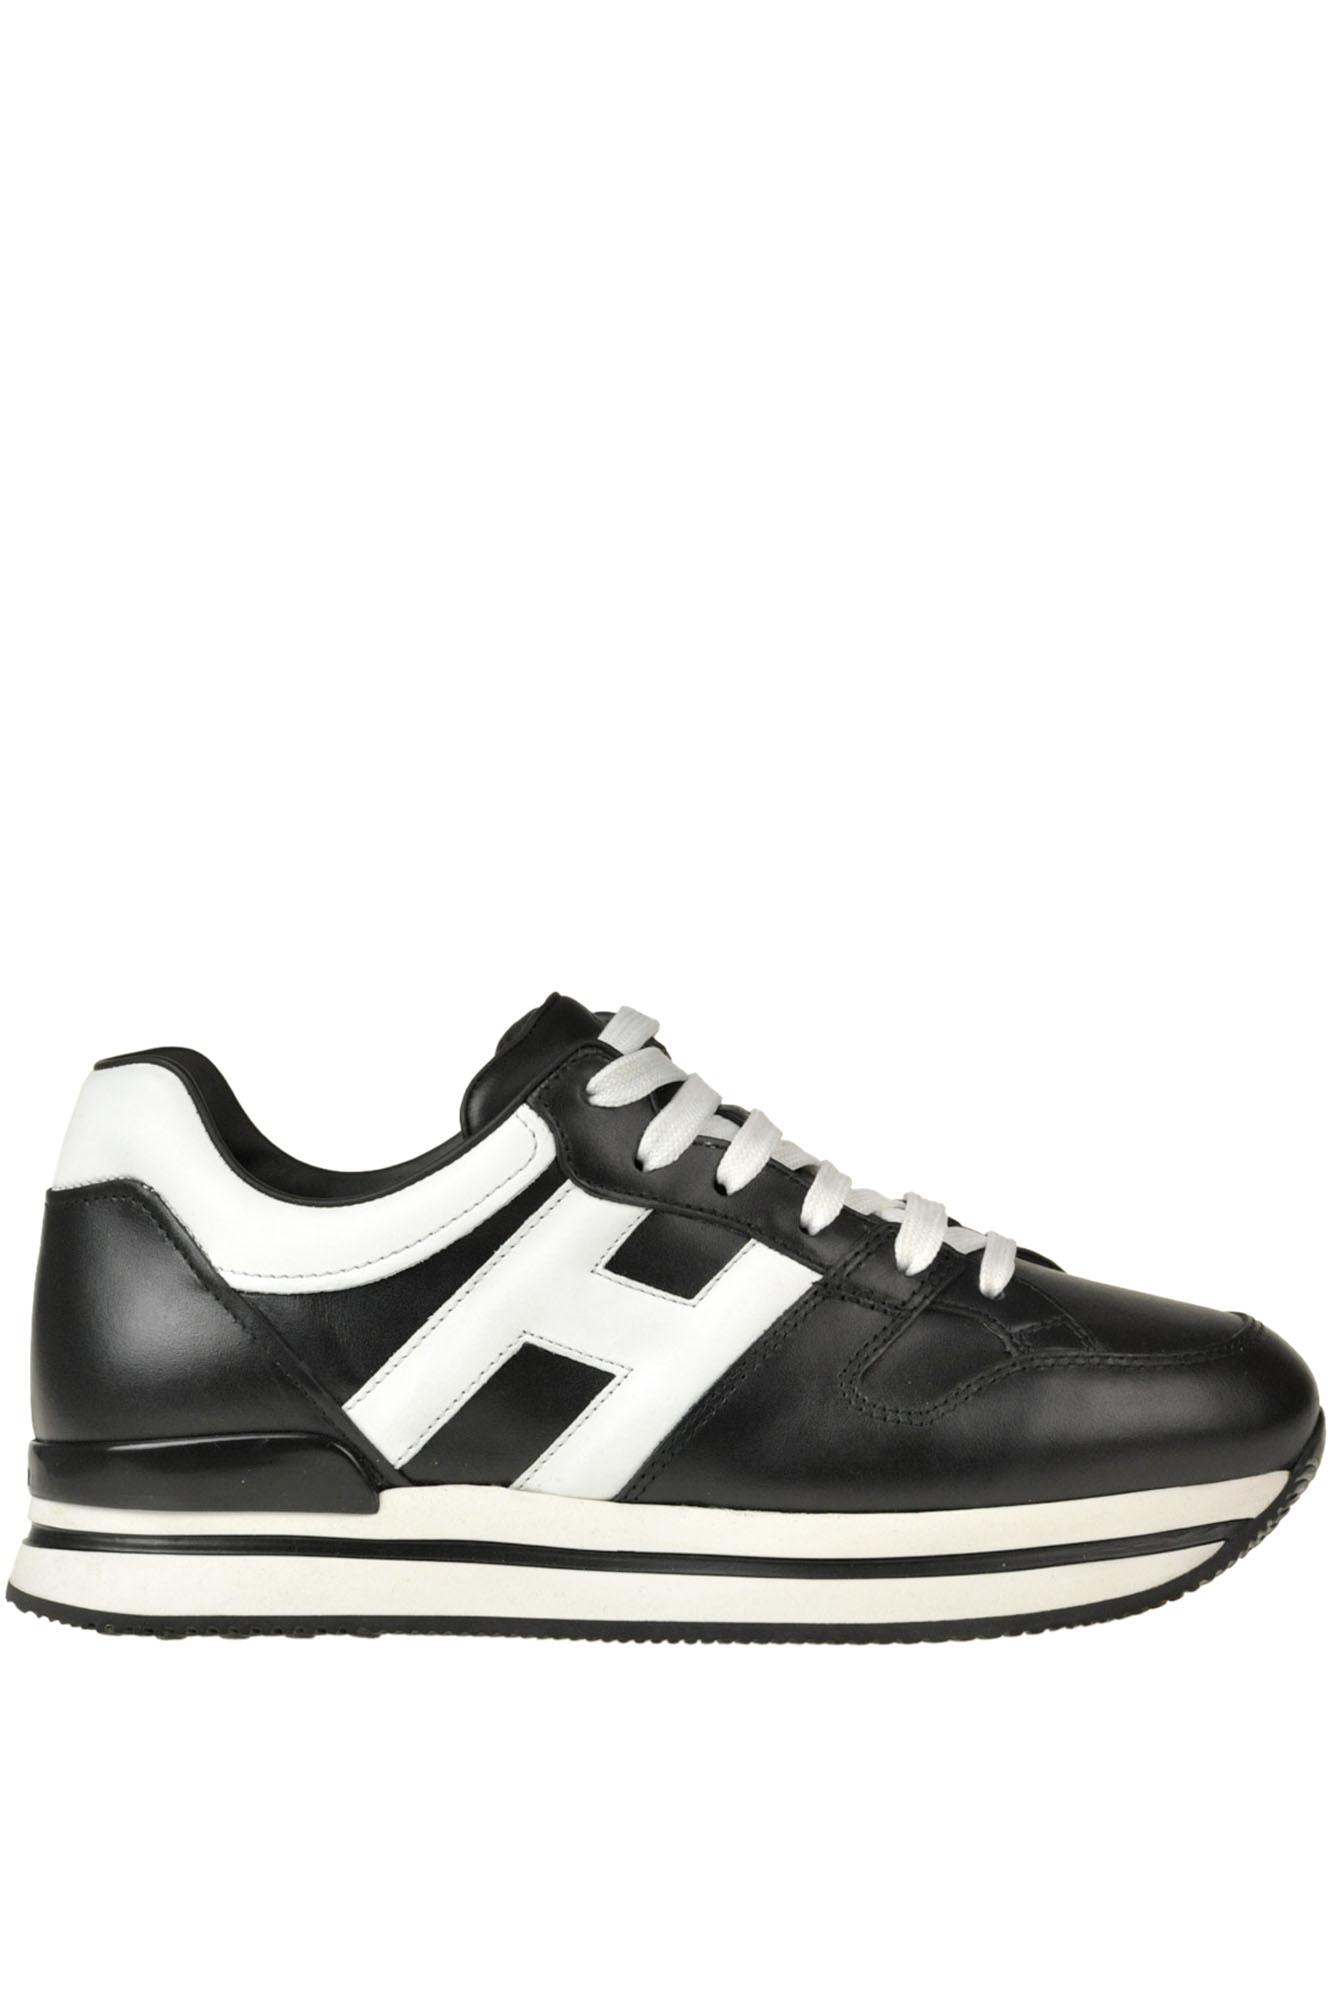 Shop Hogan H222 Leather Sneakers In Black